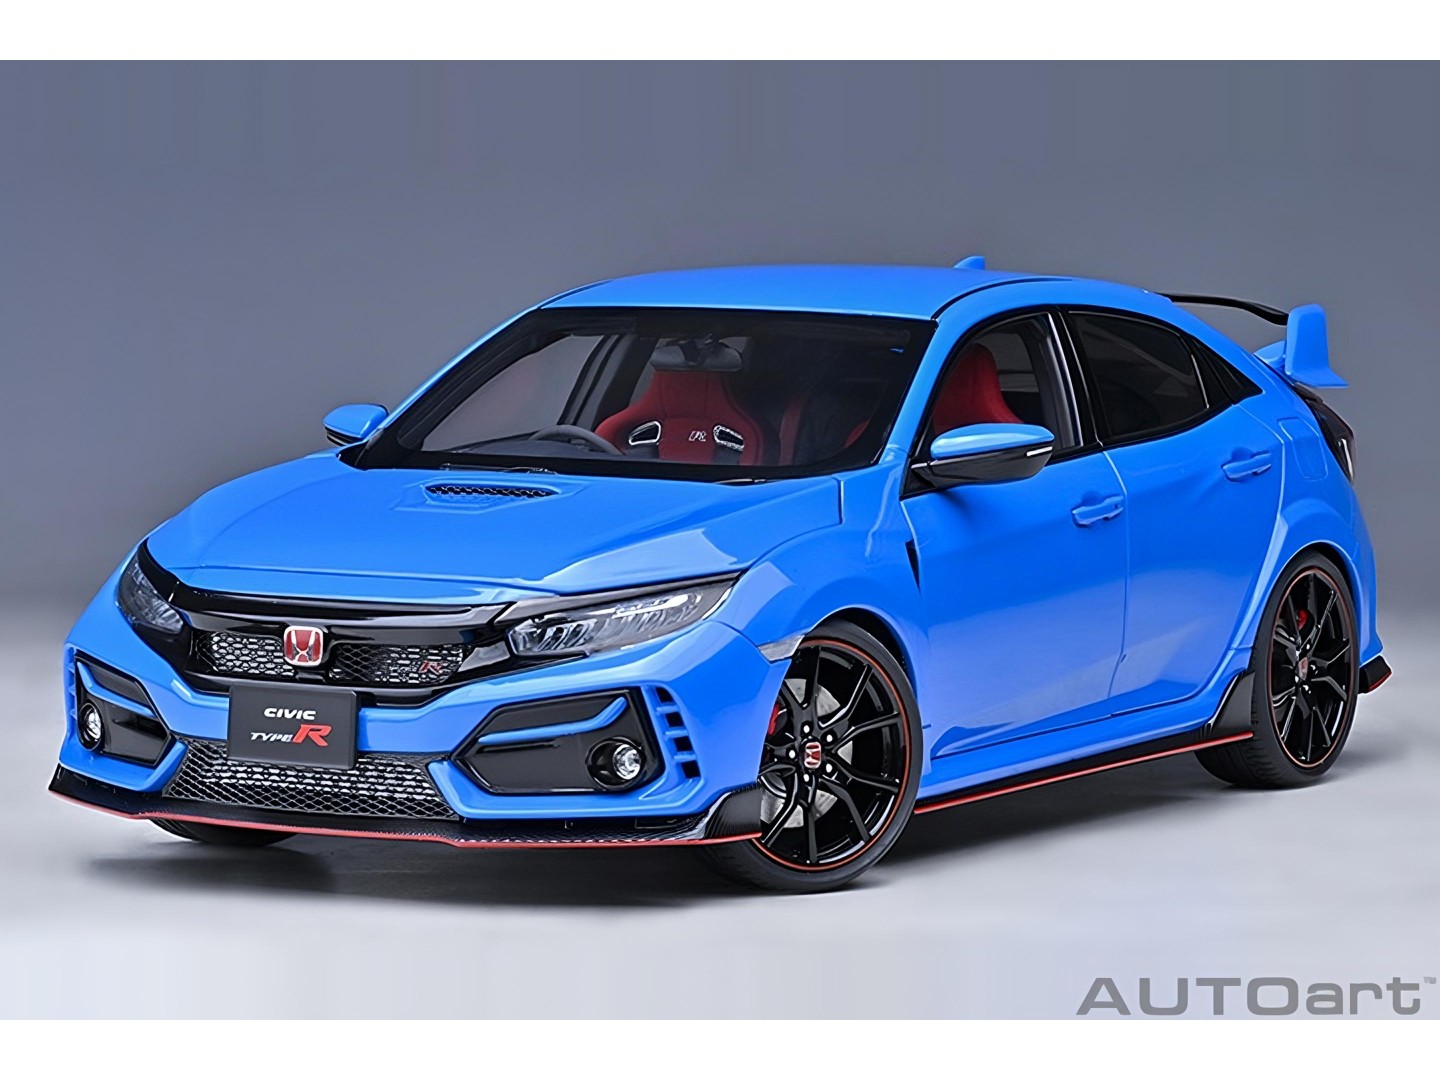 Marketplace - Honda Civic Type R (FK8) 2021 ( Course Bleu Pearl) - AUTOart - 1:18